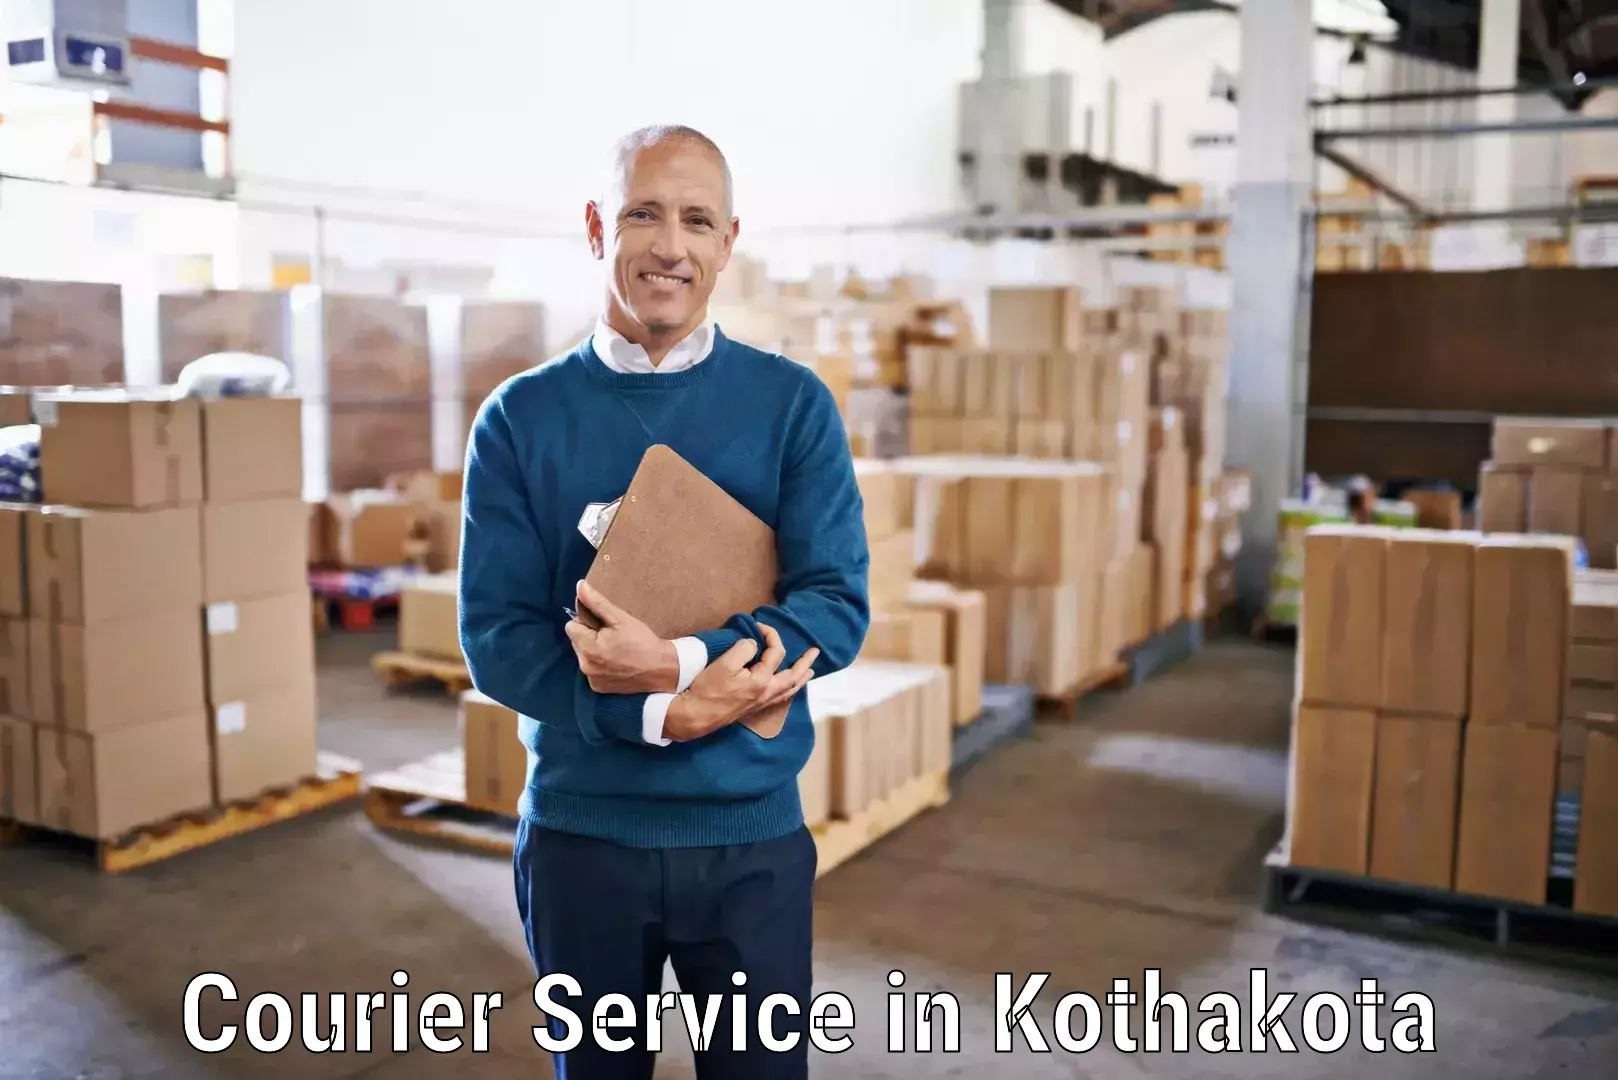 Express package services in Kothakota